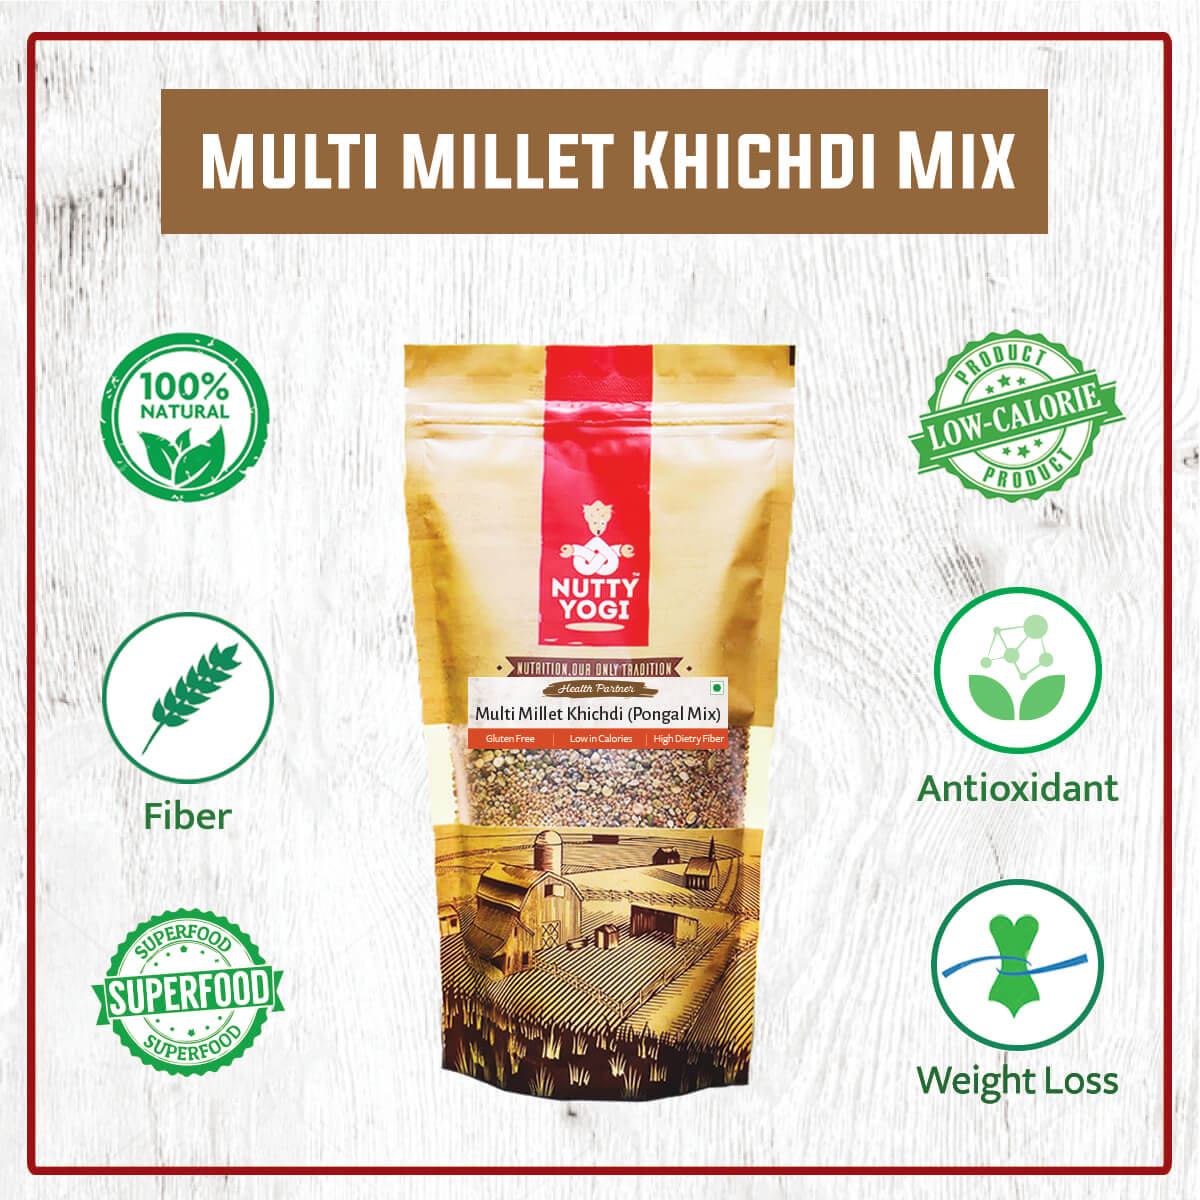 Multi Millet Khichdi Mix / Pongal Mix.